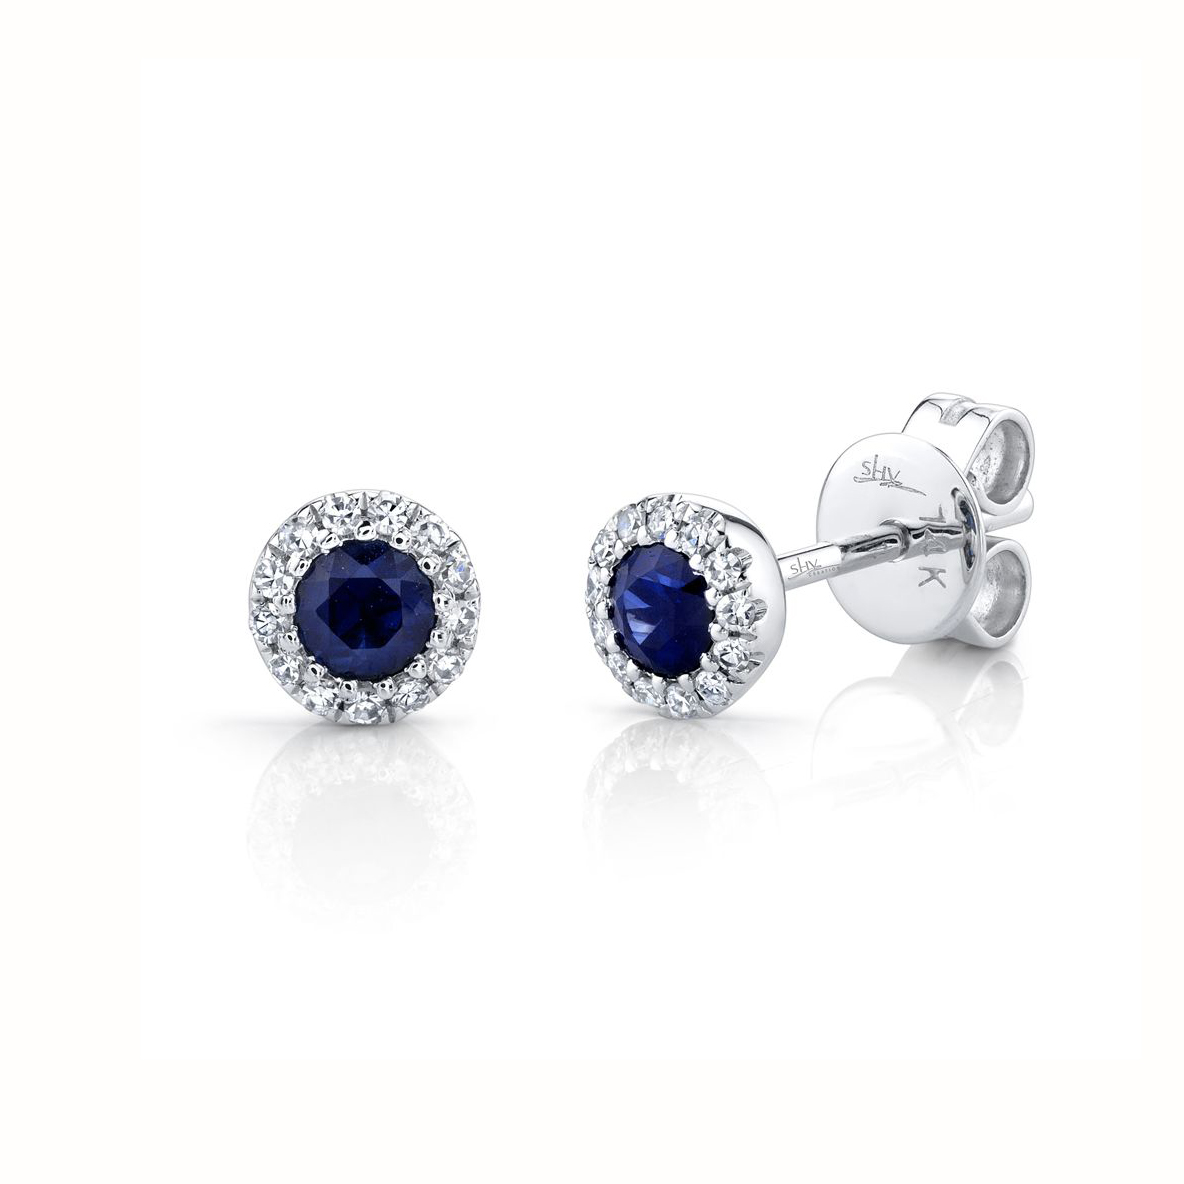 163021Diamond and Sapphire Halo Stud Earrings